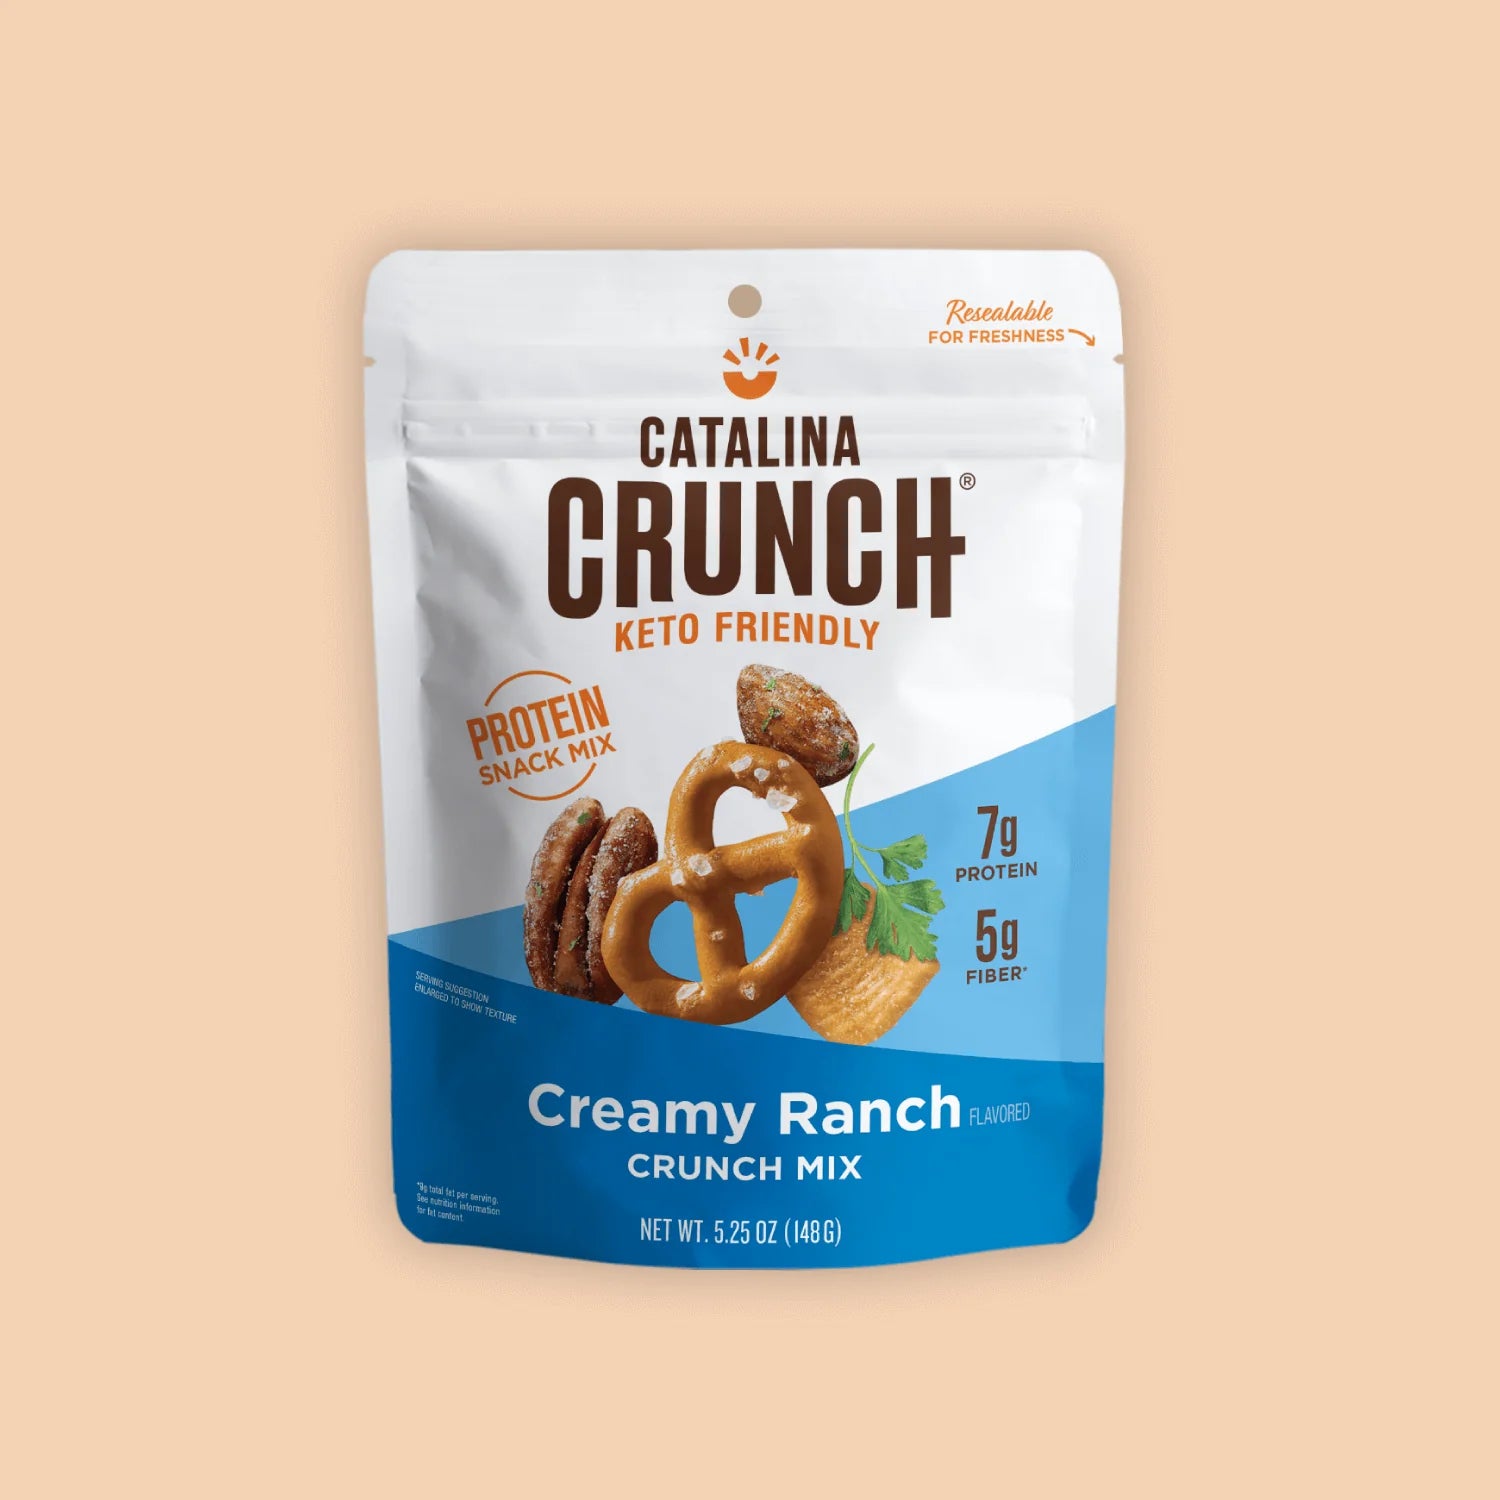 Catalina Crunch Snack Crunch Mix (1 bag) Ranch Catalina Crunch